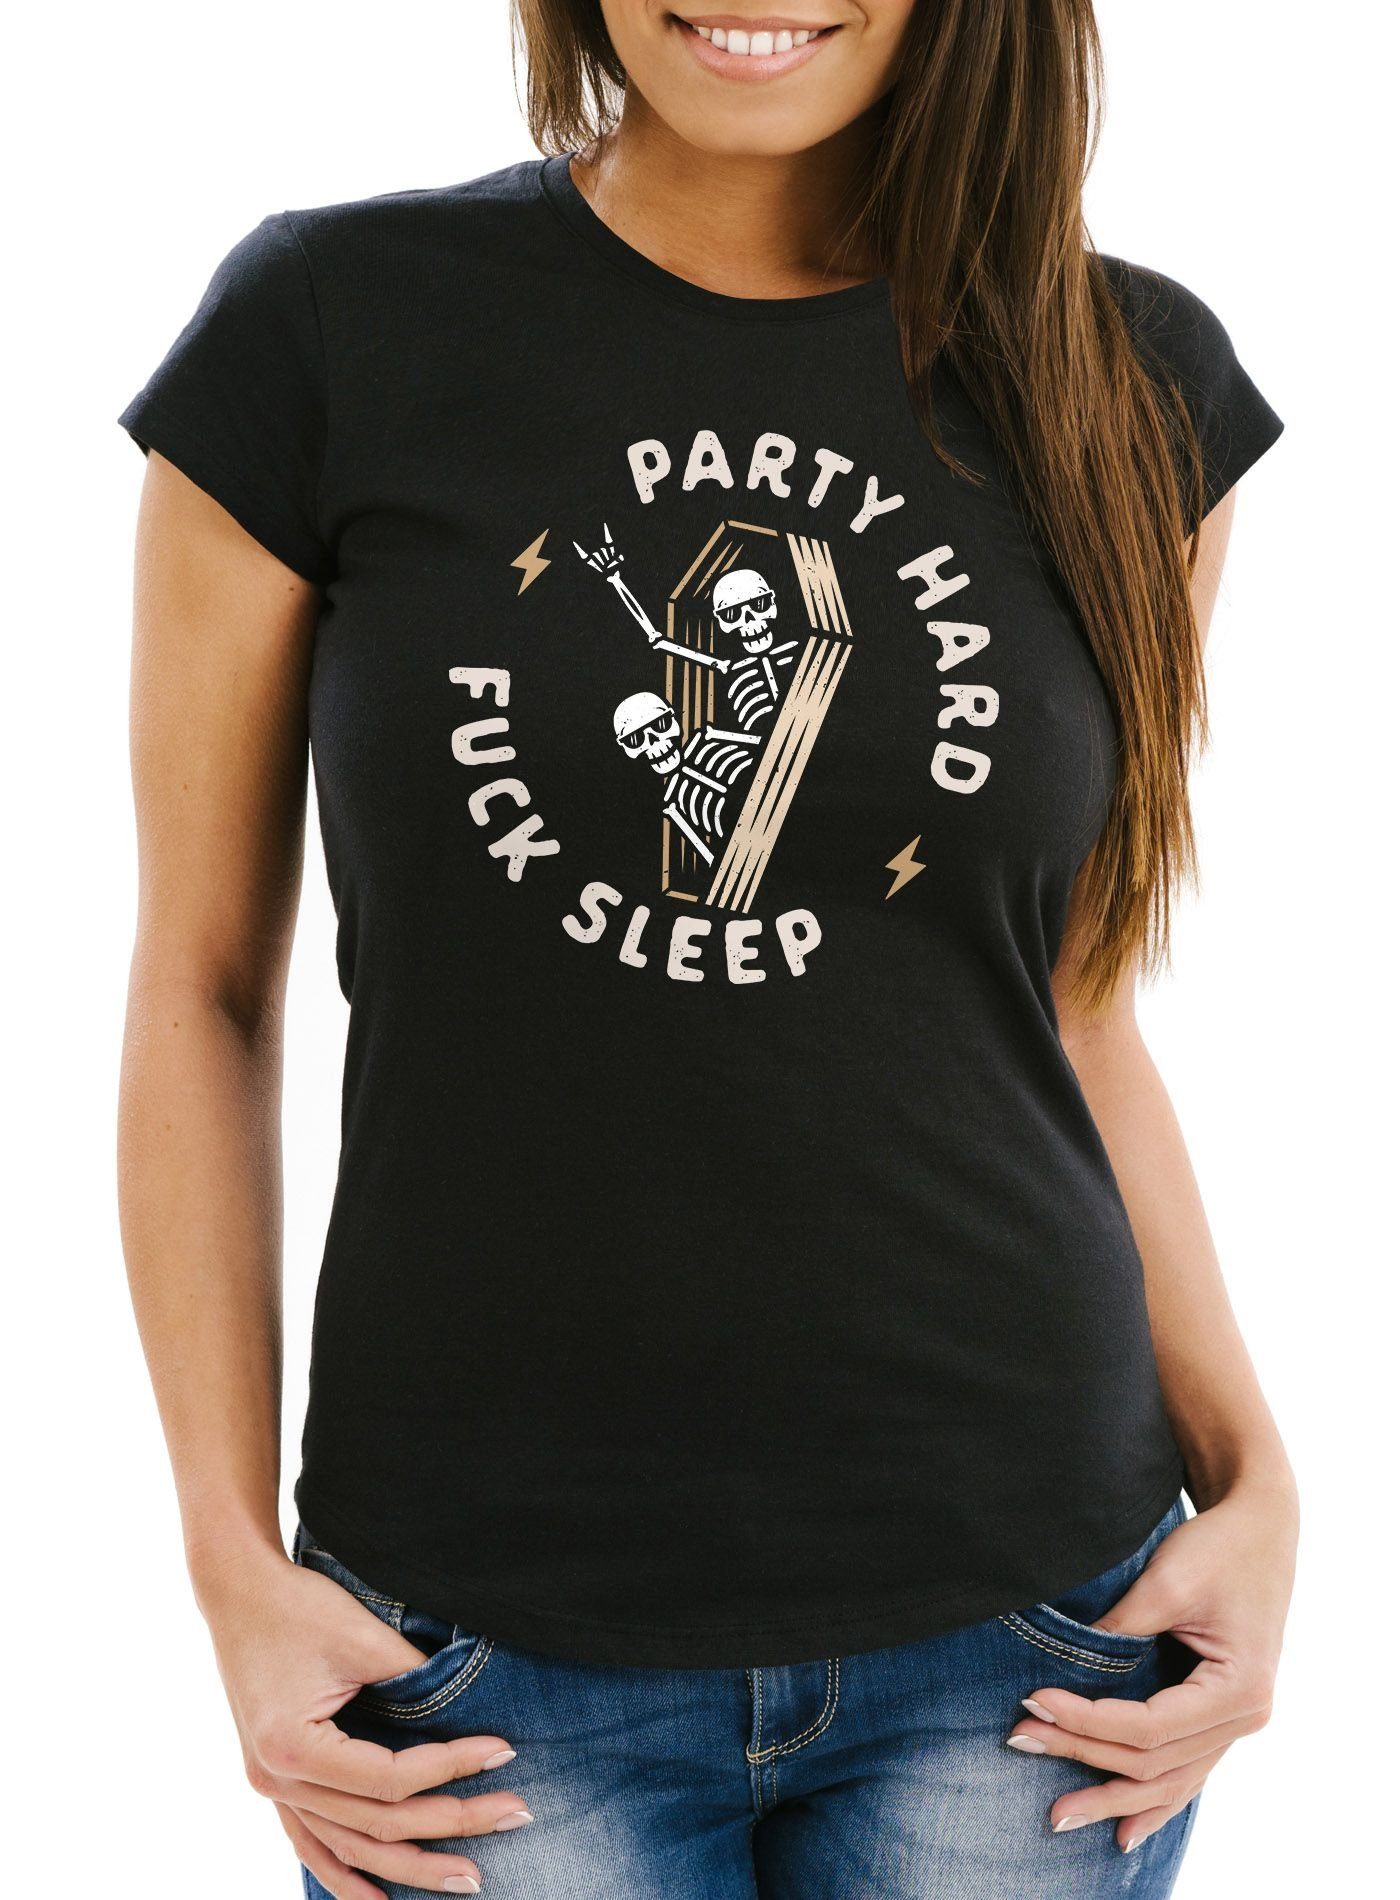 Fit Slim Print Neverless® Print-Shirt Spruch Sleep T-Shirt Skeleton Fuck Skelett Party Hard Sarg Damen mit Neverless Motiv-Print